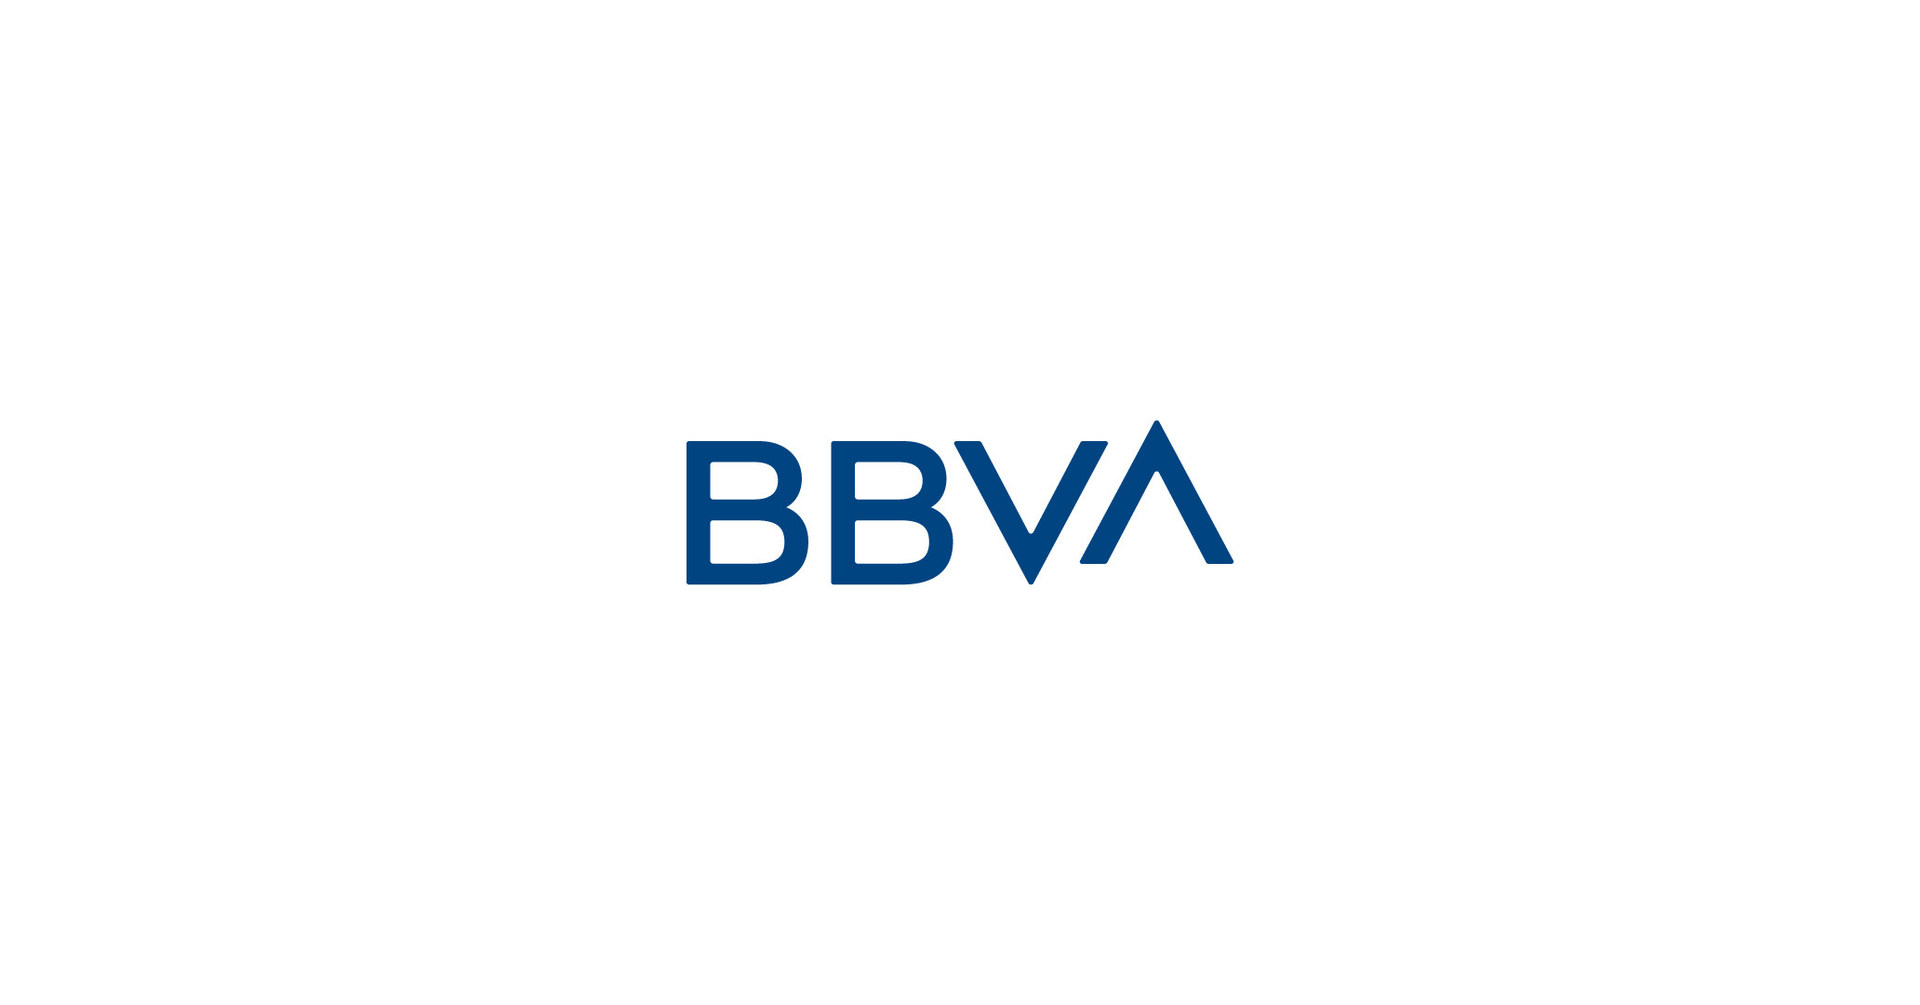 The World Games 2022 Birmingham announces BBVA USA as the presenting sponsor of its volunteer program